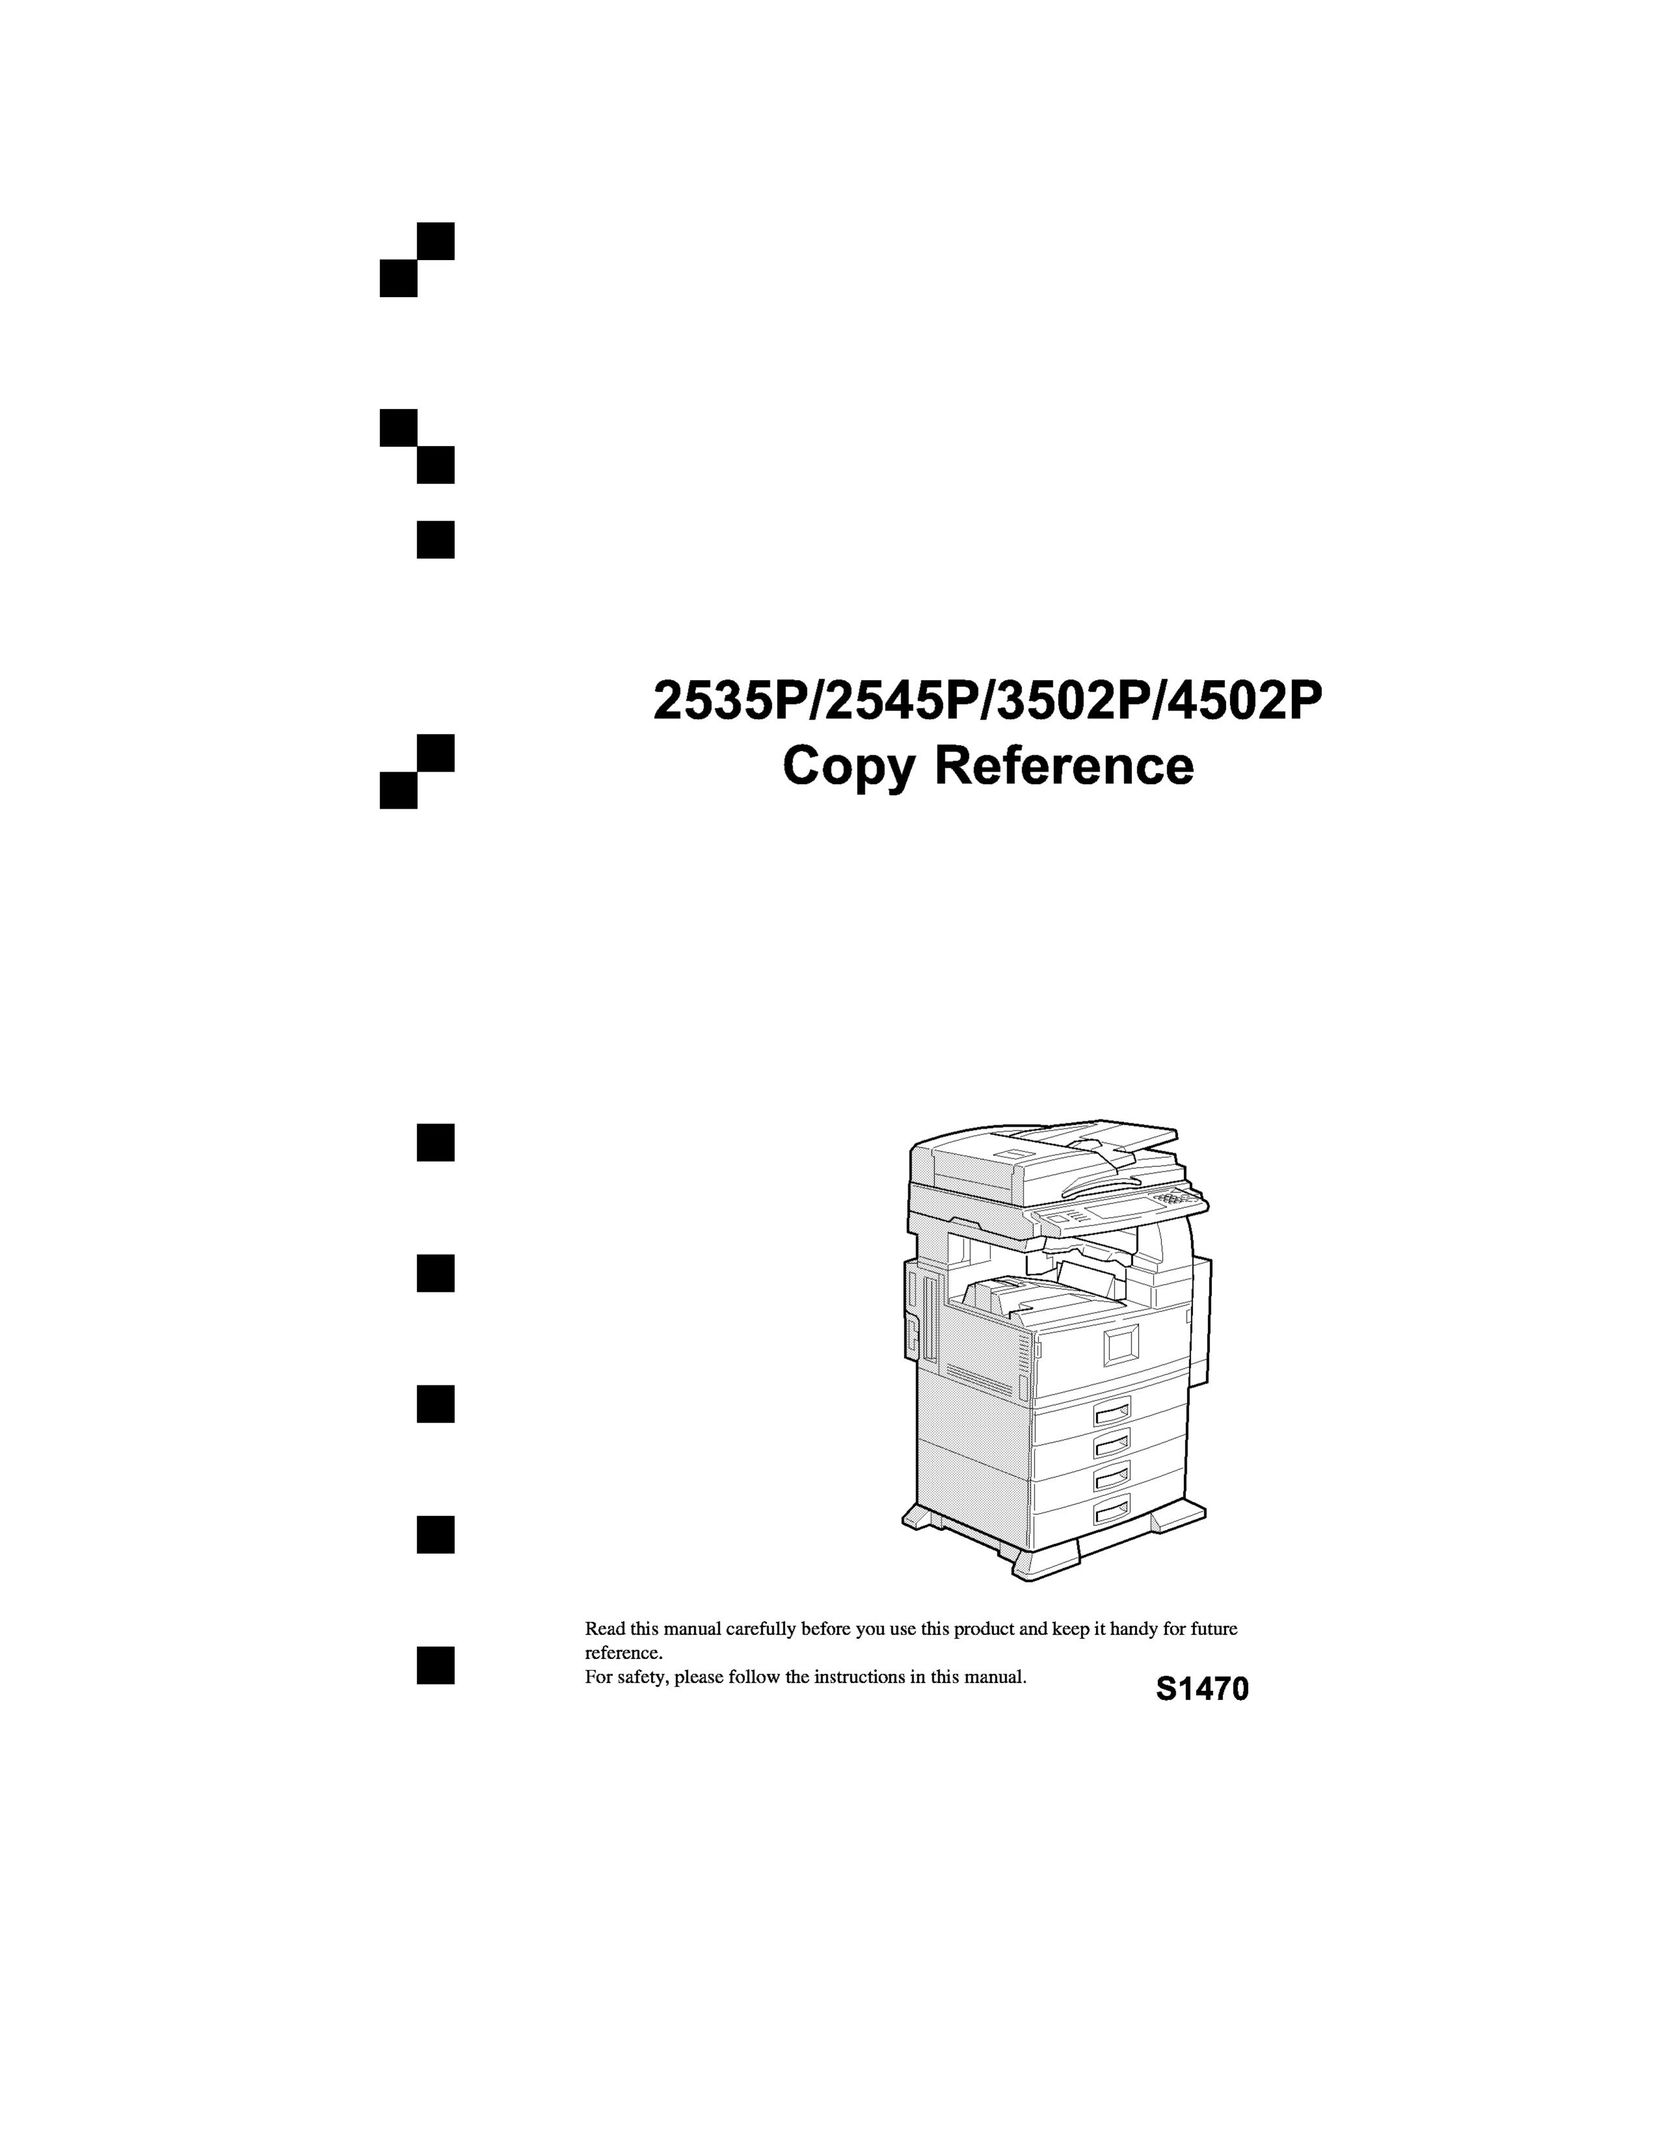 Savin 3502P All in One Printer User Manual